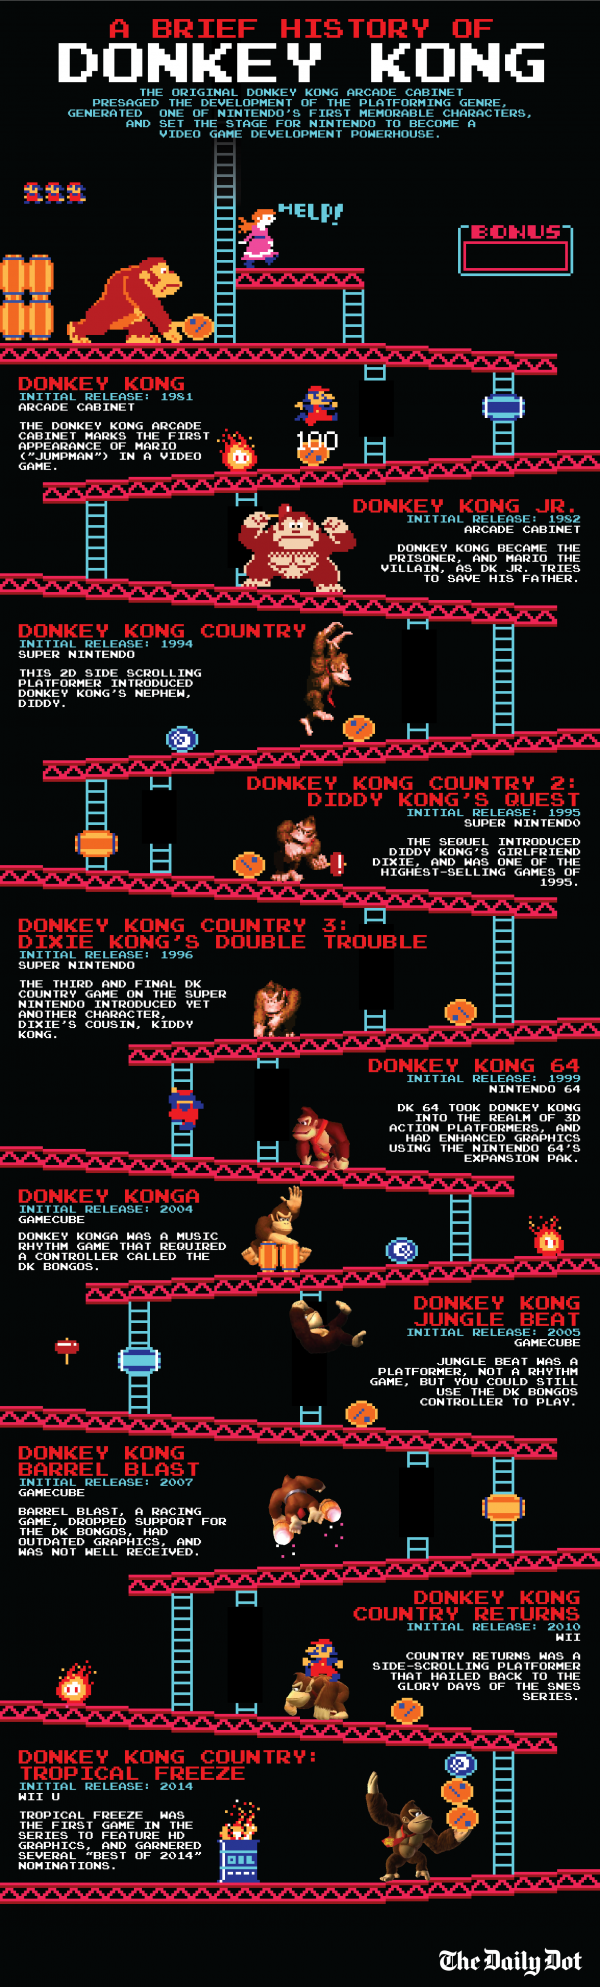 Povijest Donkey Konga u infografici Screenshot/Make Use Of